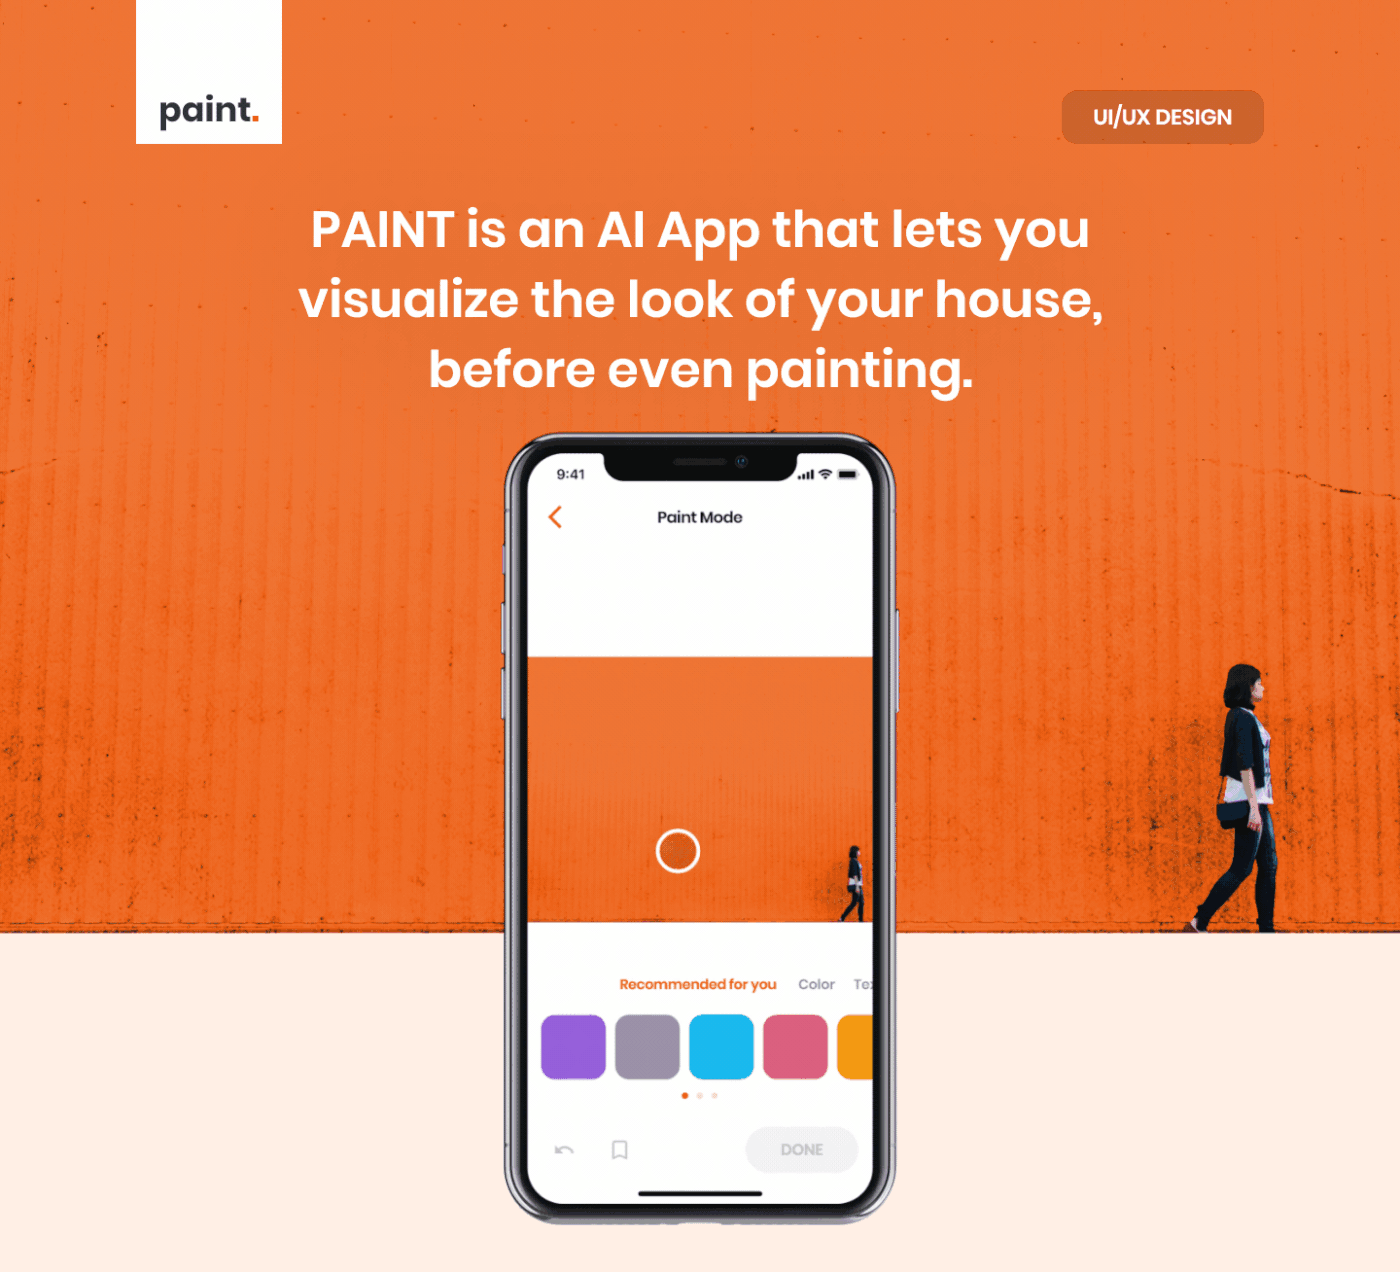 ai app UI ux Adobe XD ui design visual design paint app interior design app house painting app artificial intelligence